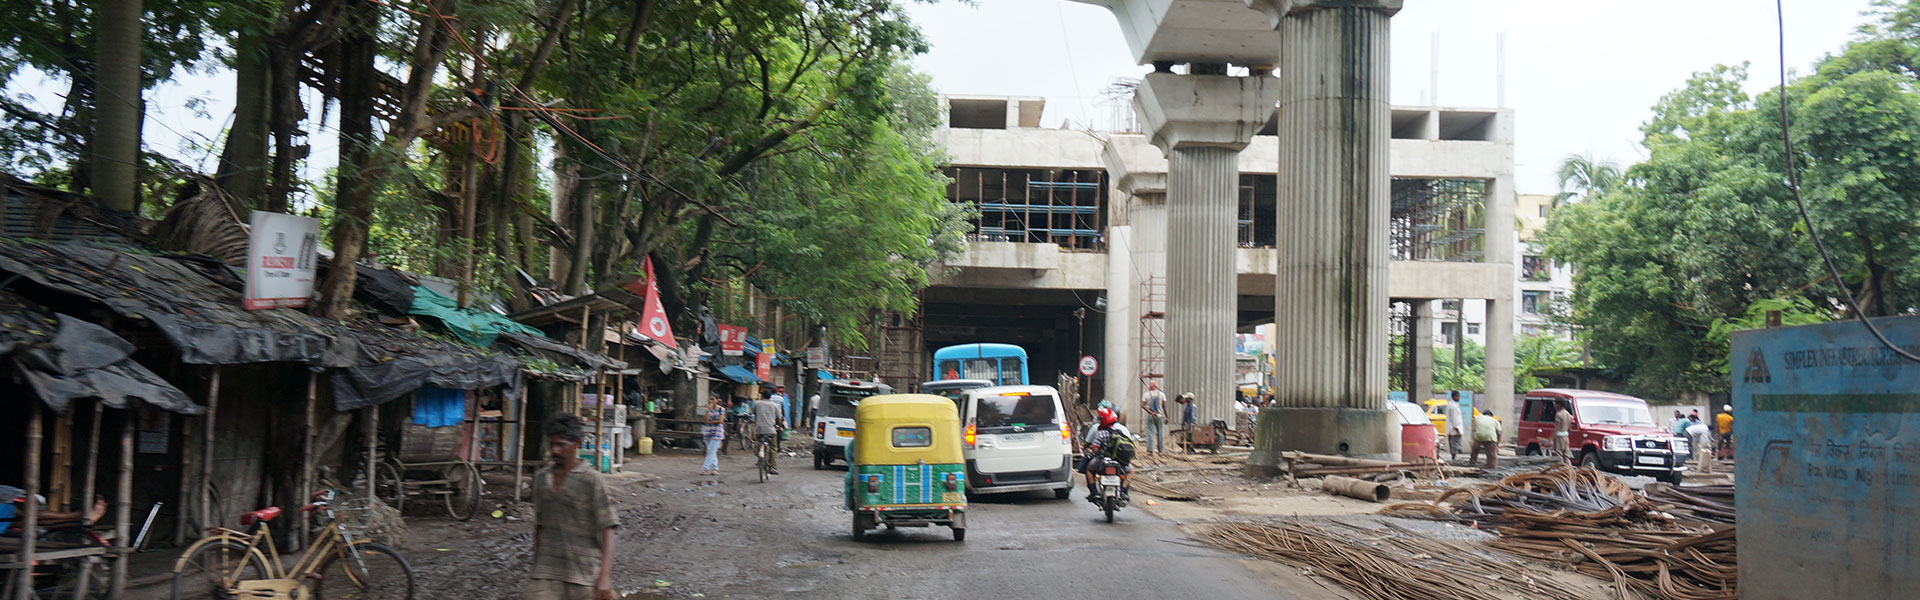 Kolkata Construction